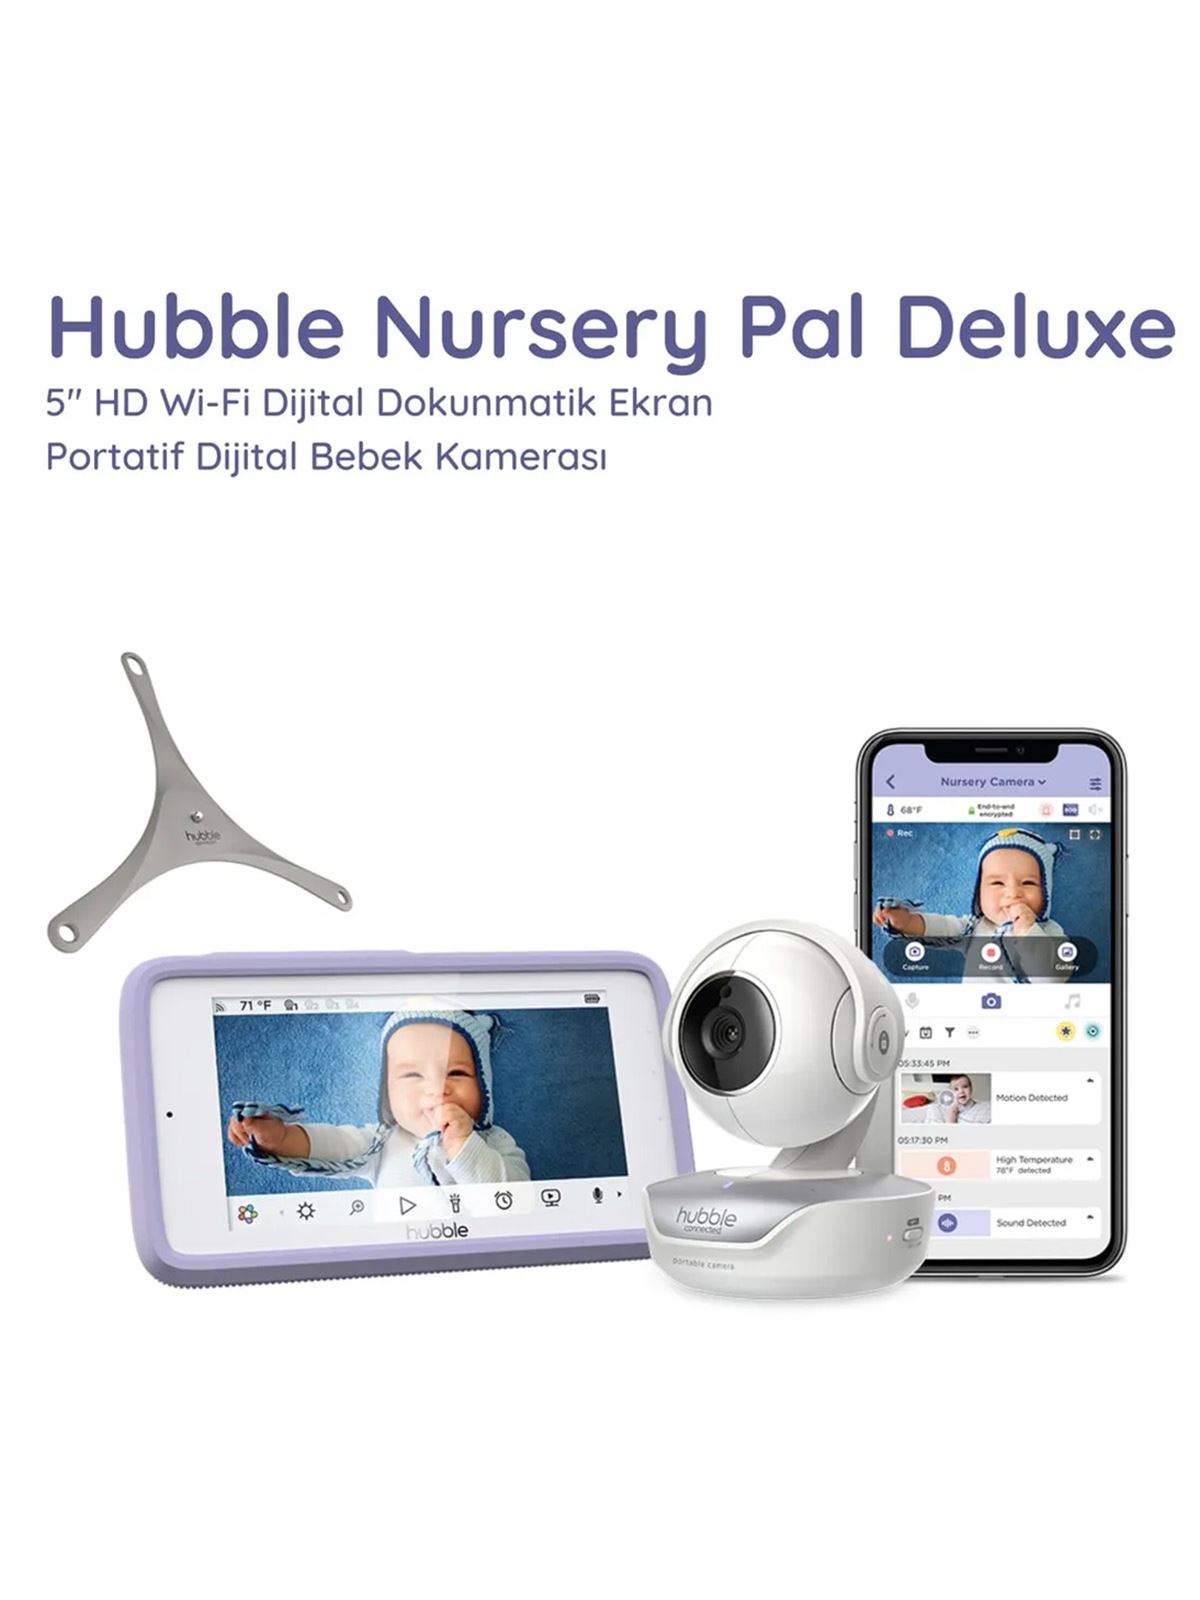 Hubble Nursery Pal Deluxe 5” Hd Wi-fi Dokunmatik Ekran Portatif Dijital Bebek Kamerasıs